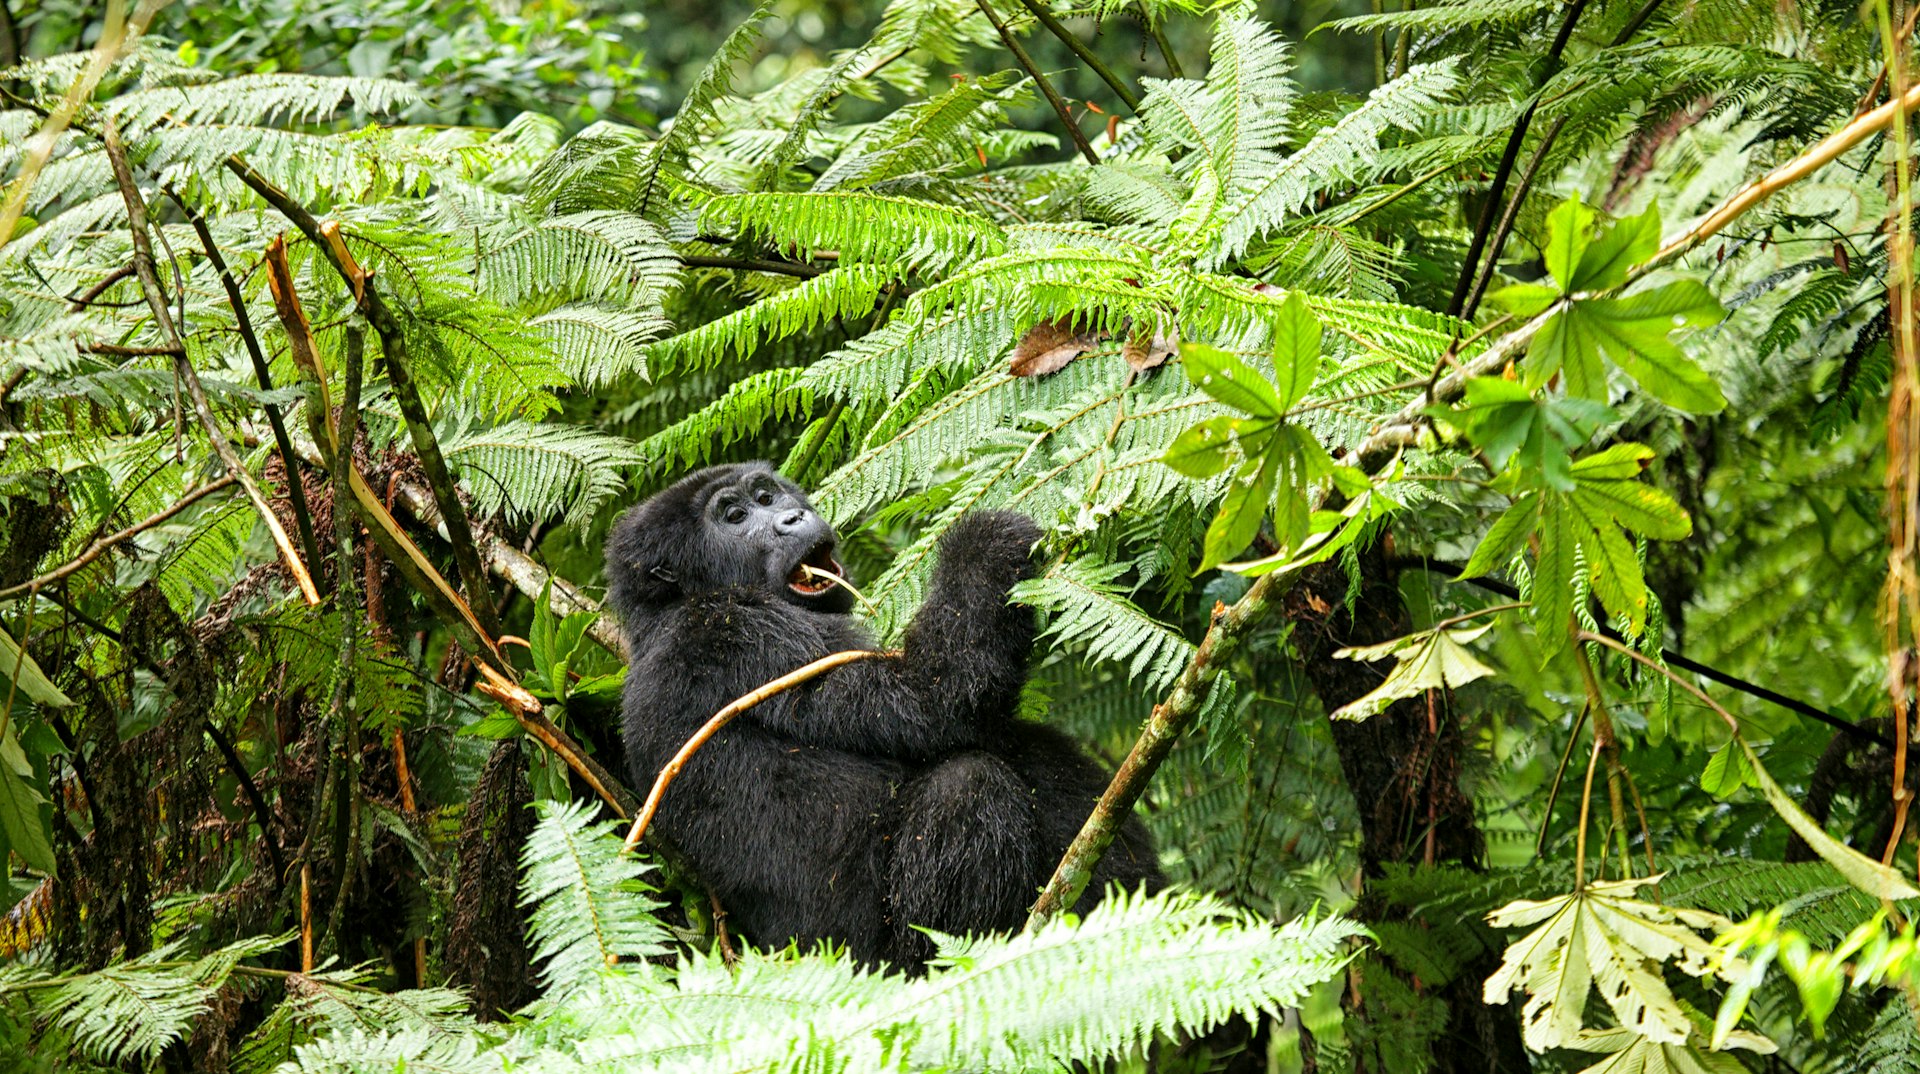 A gorilla eating in Bwindi Impenetrable National Park in Uganda